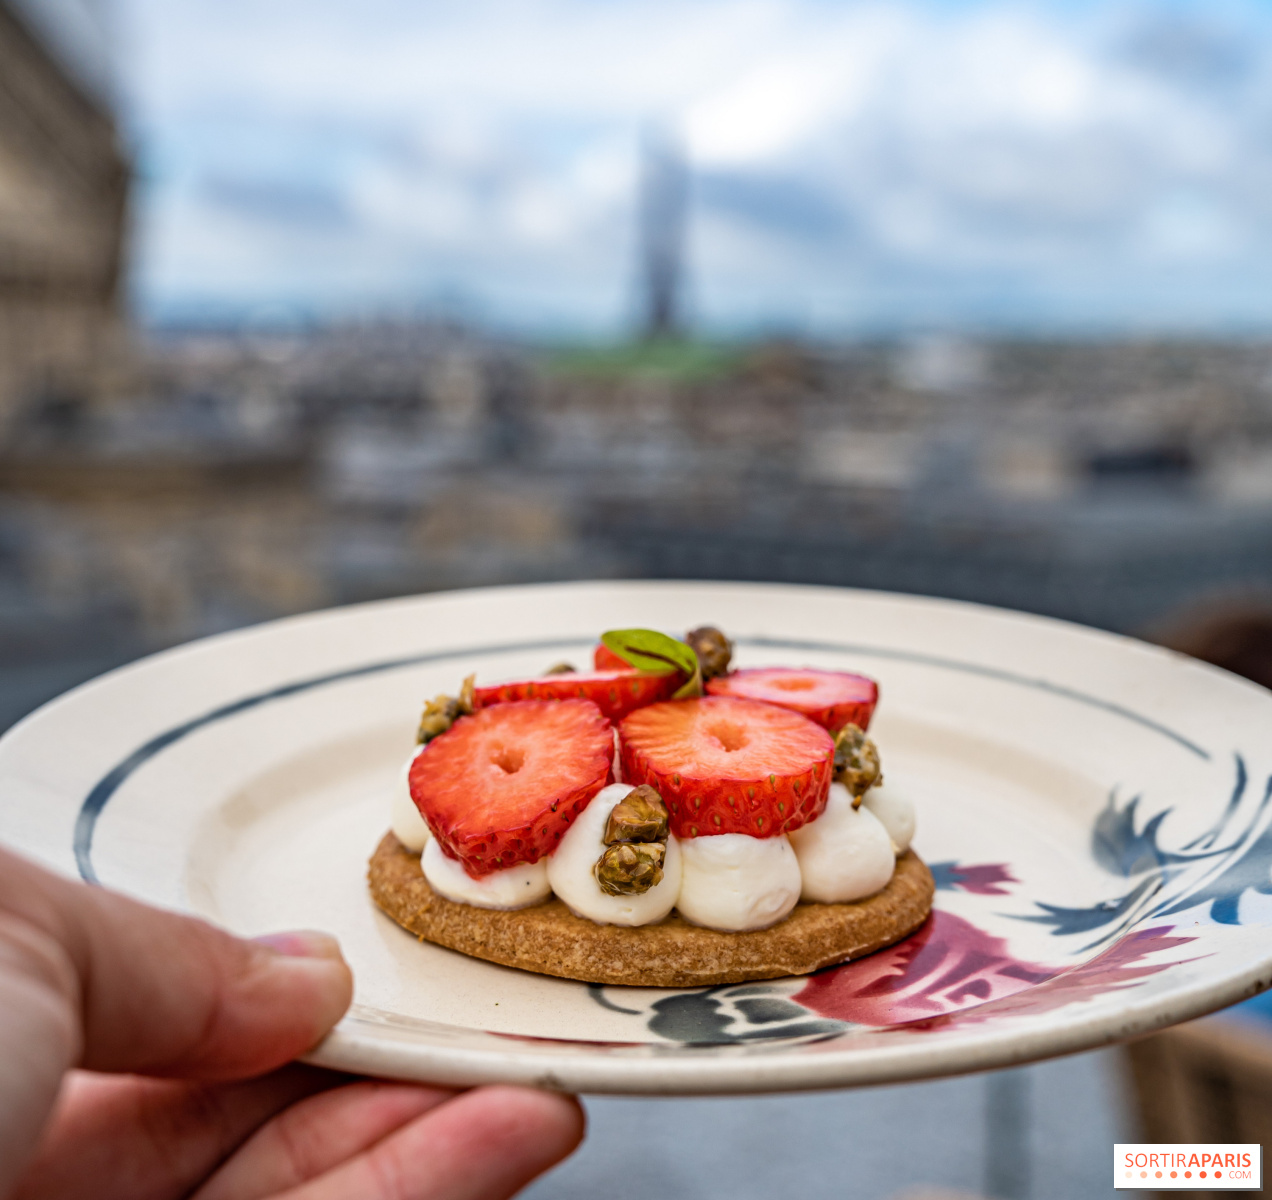 Galeries Lafayette - It's time for a rooftop dinner at Galeries Lafayette  to make the most of the sunny weather! 📸 by jezza.pritchard #paris  #parismonamour #mylittleparis #emilyinparis #巴黎 #loves_paris #parisjetaime  #parisianvibe #